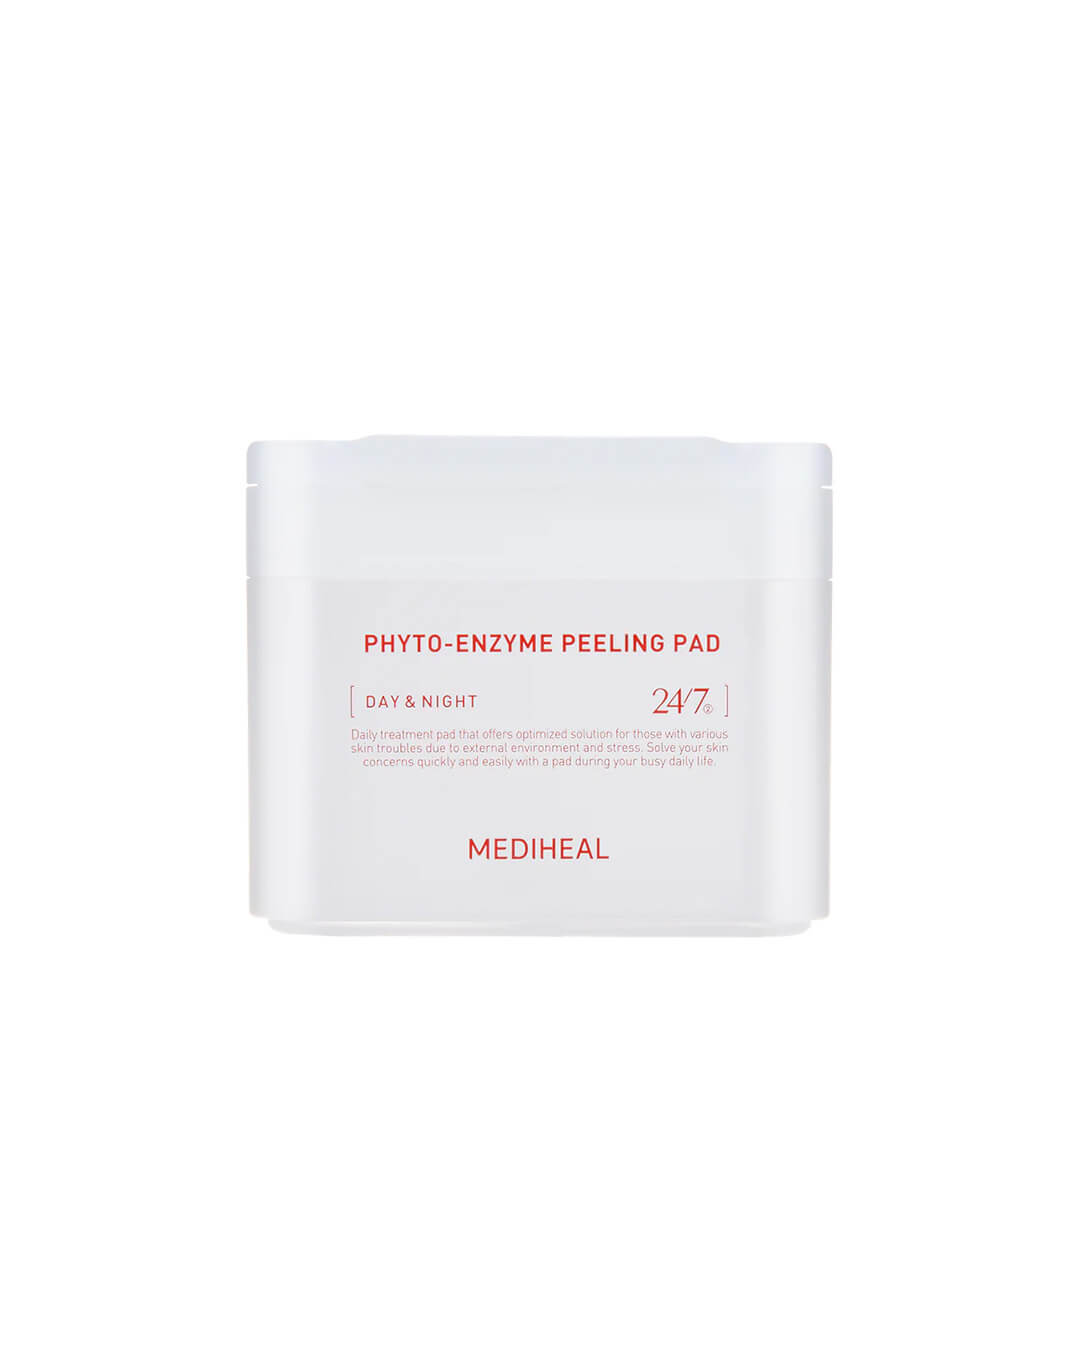 Ohlolly Korean Skincare Mediheal Phyto-enzyme Peeling Pad